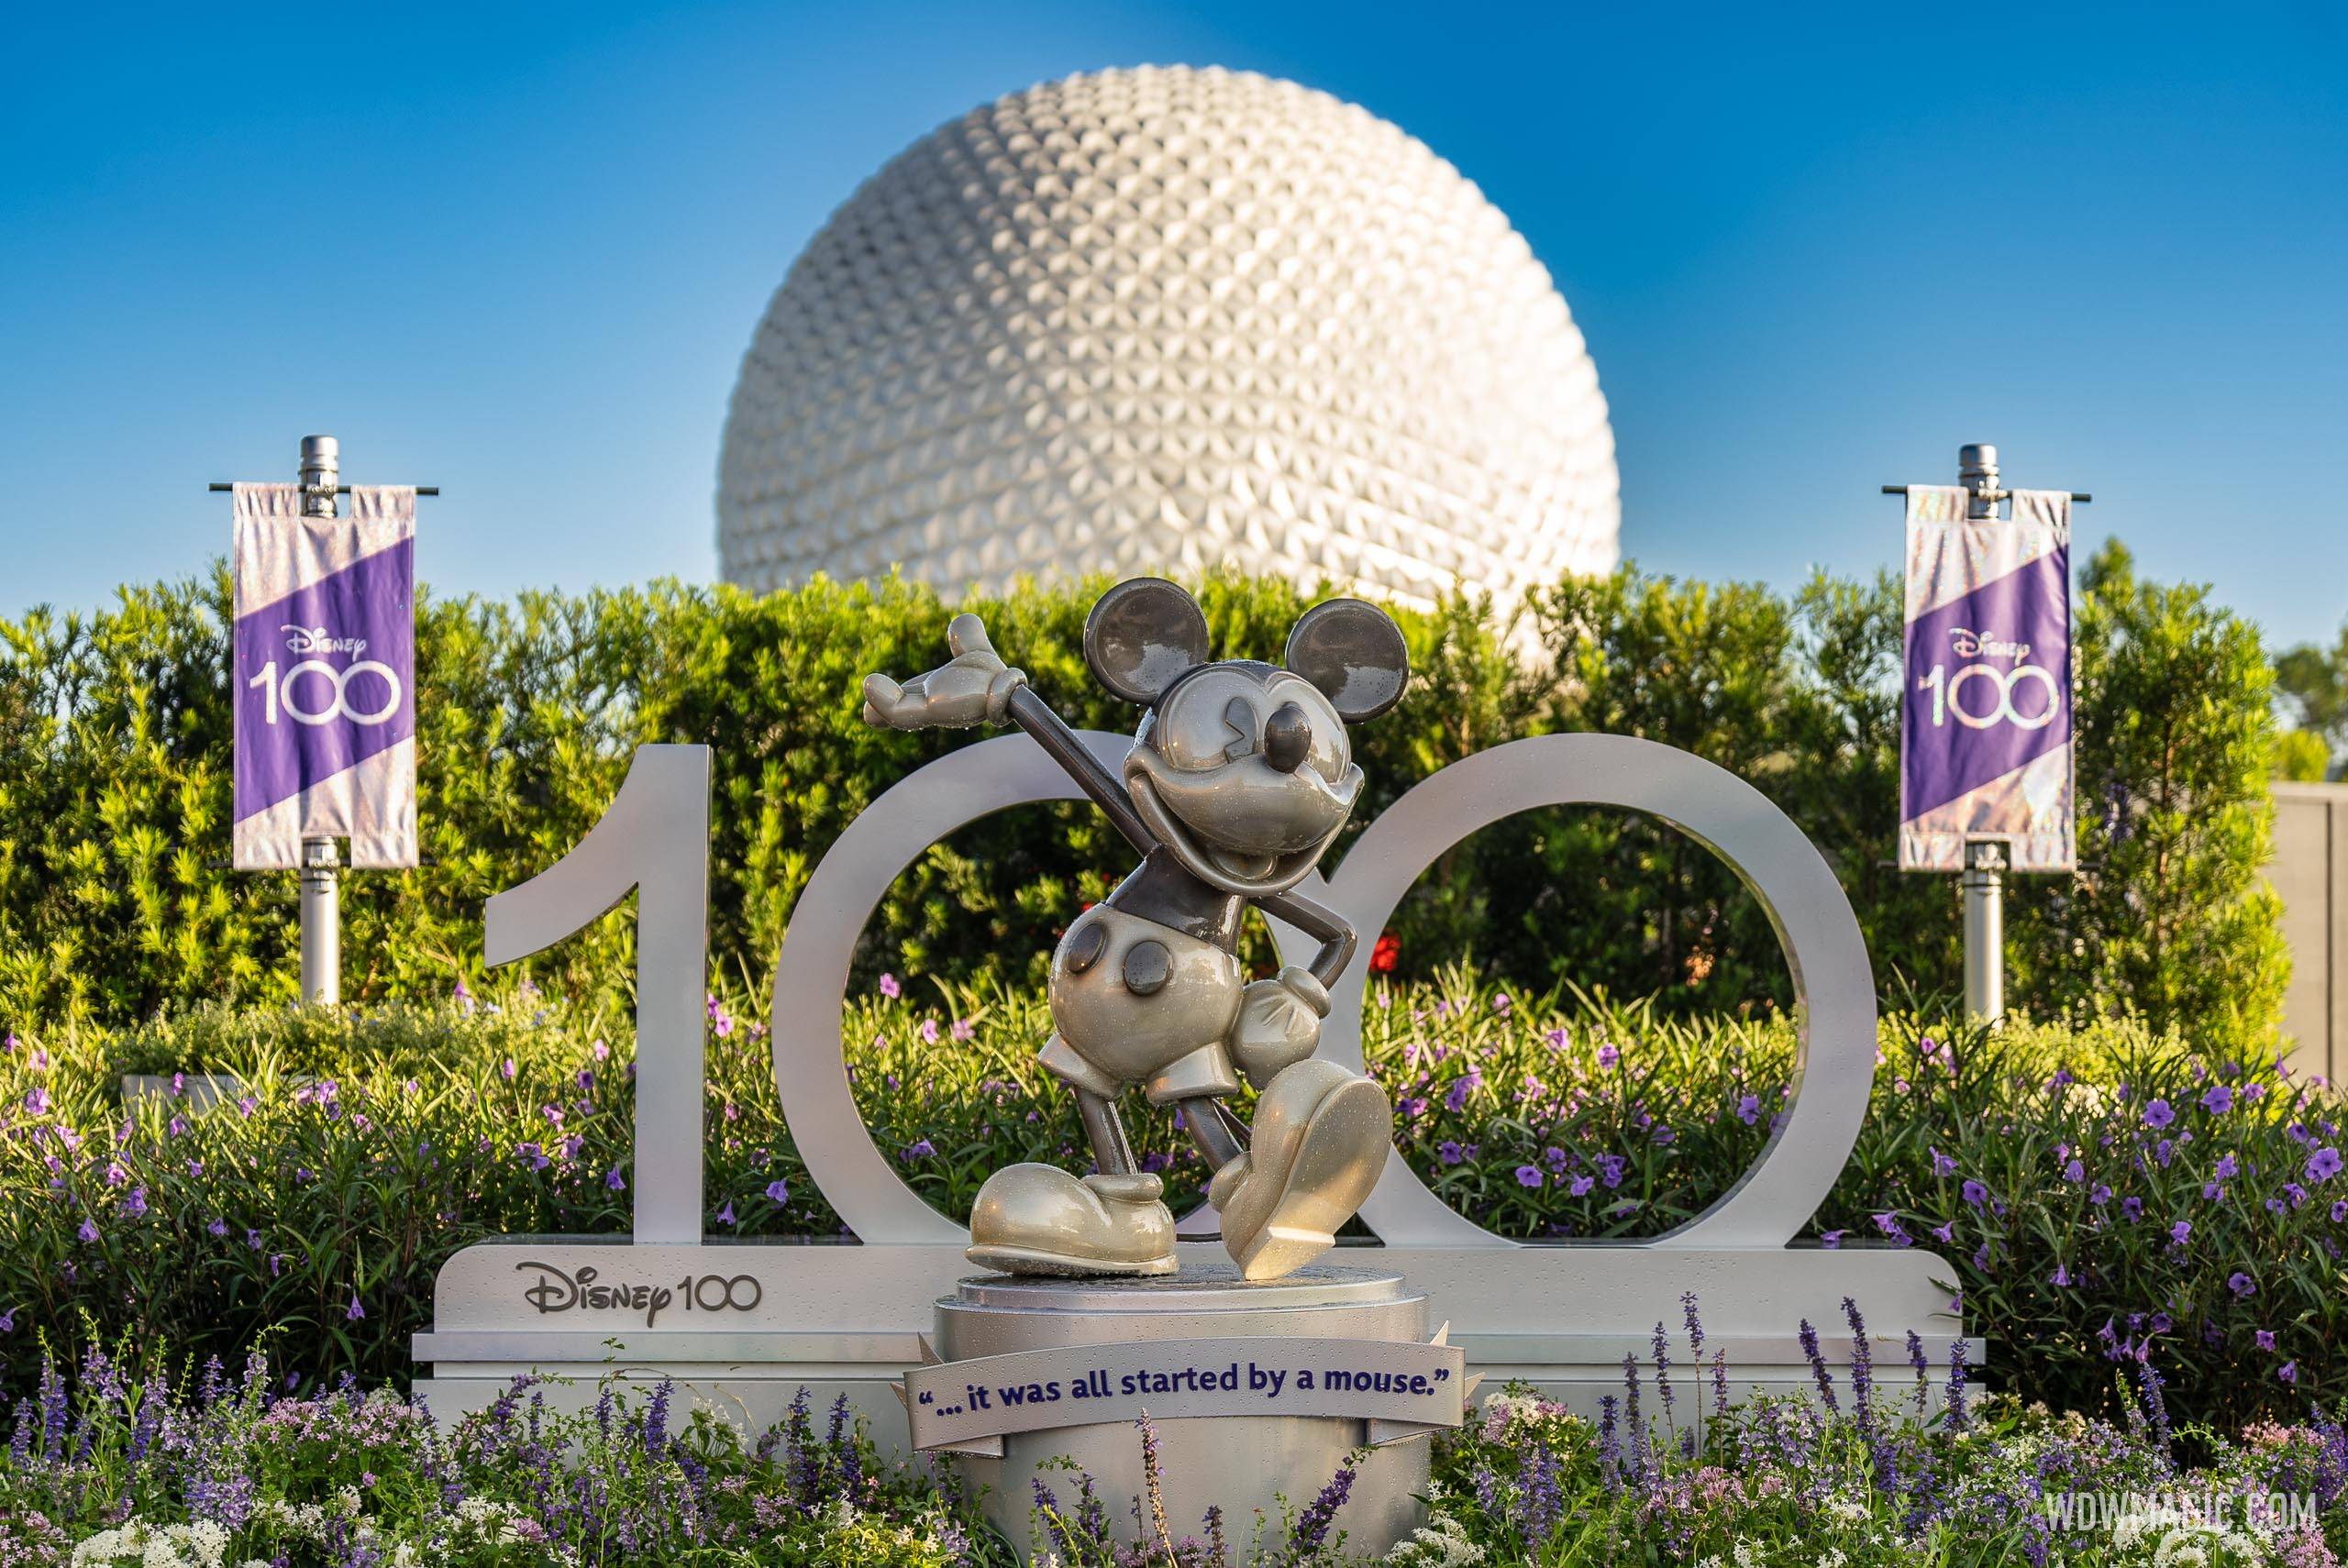 PHOTOS, VIDEO: Meet Mickey and Minnie in Their Platinum Disney100